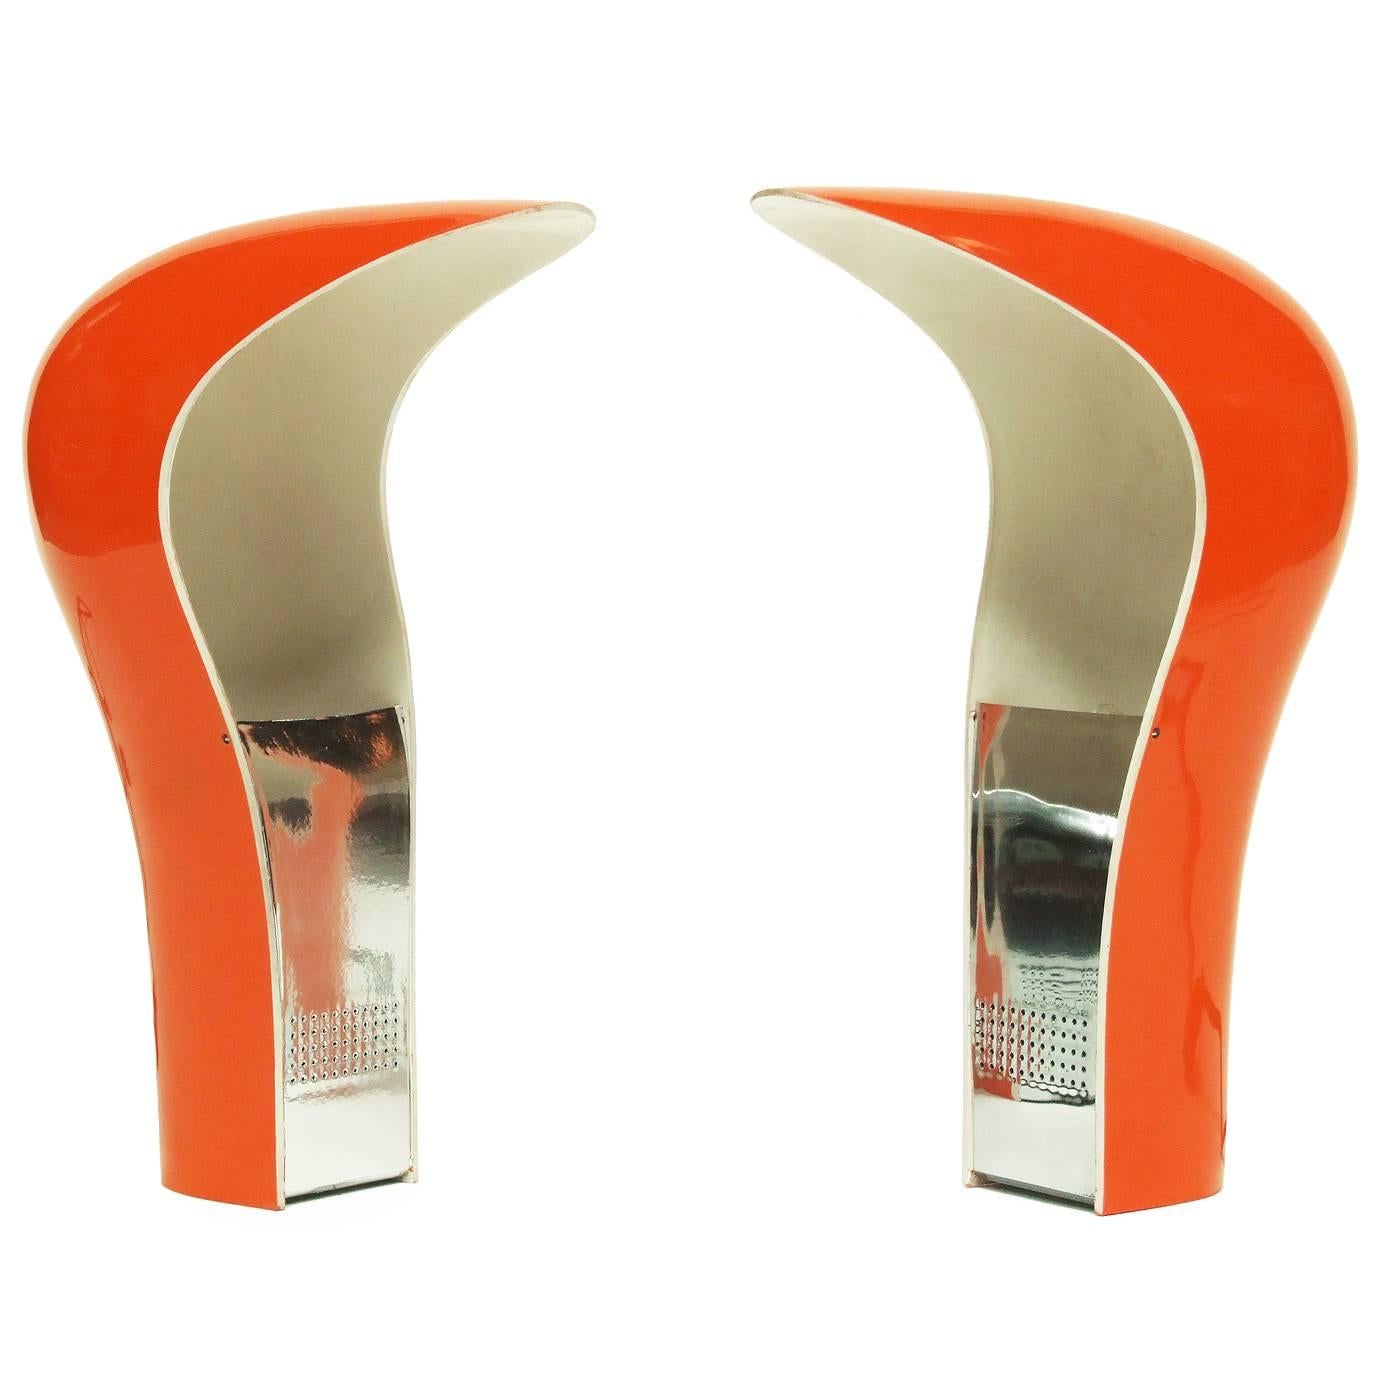 Pair of Orange Pelota Table Lamps by Studio DA, Italy